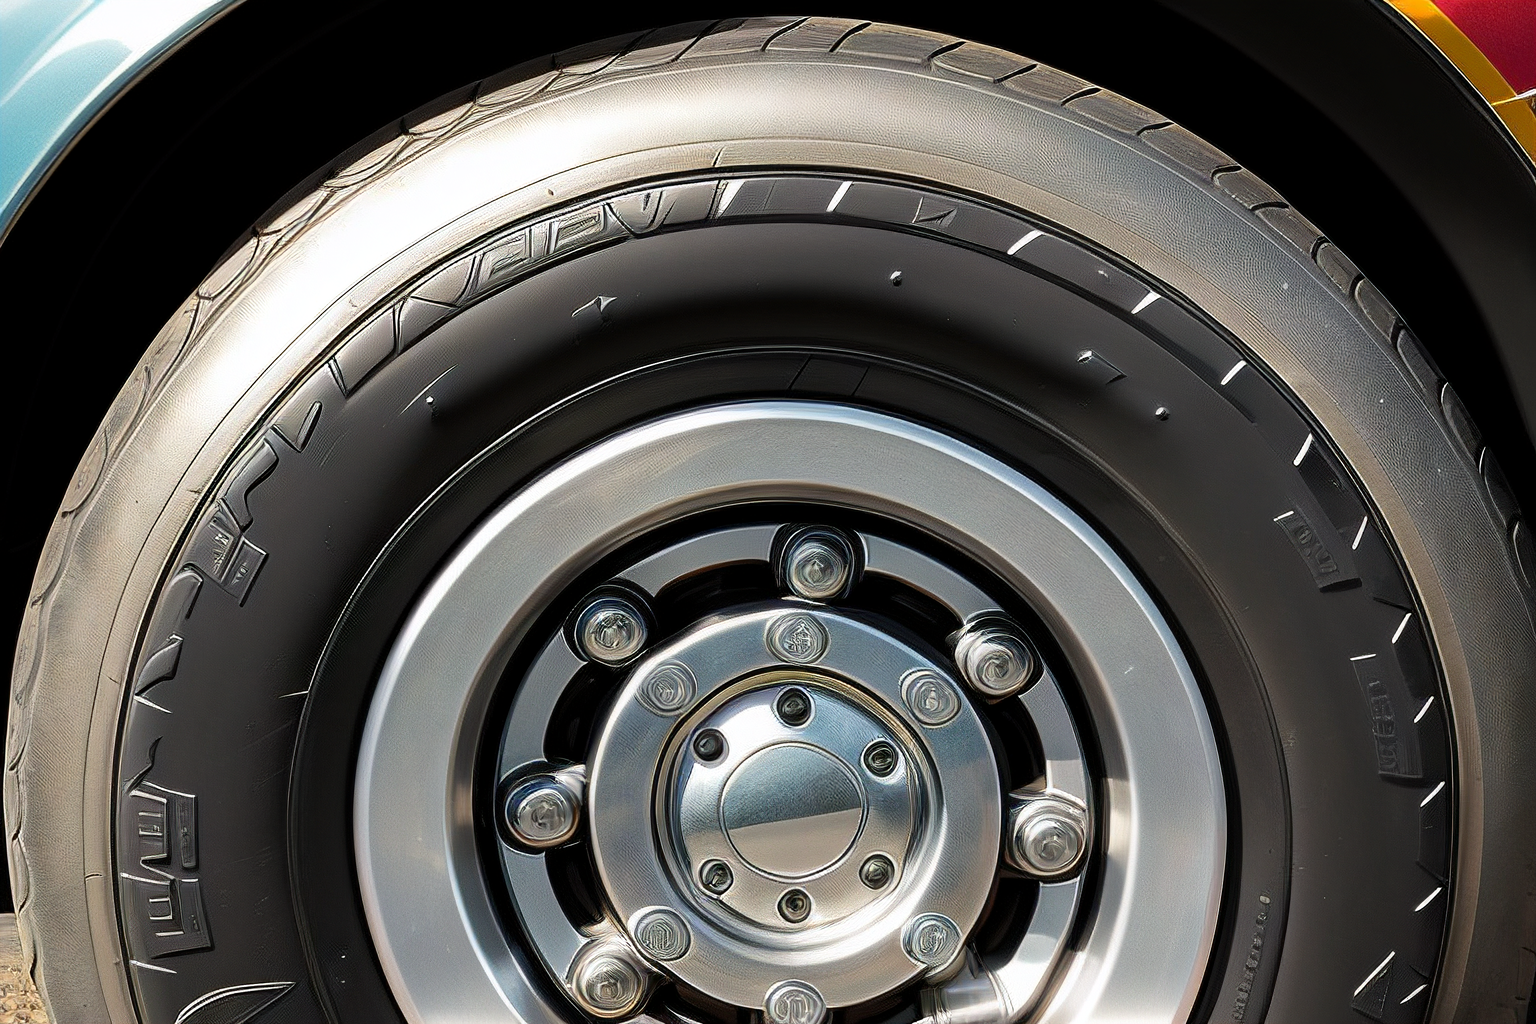 Harley Davidson Wheel Bearings Problems: Guide